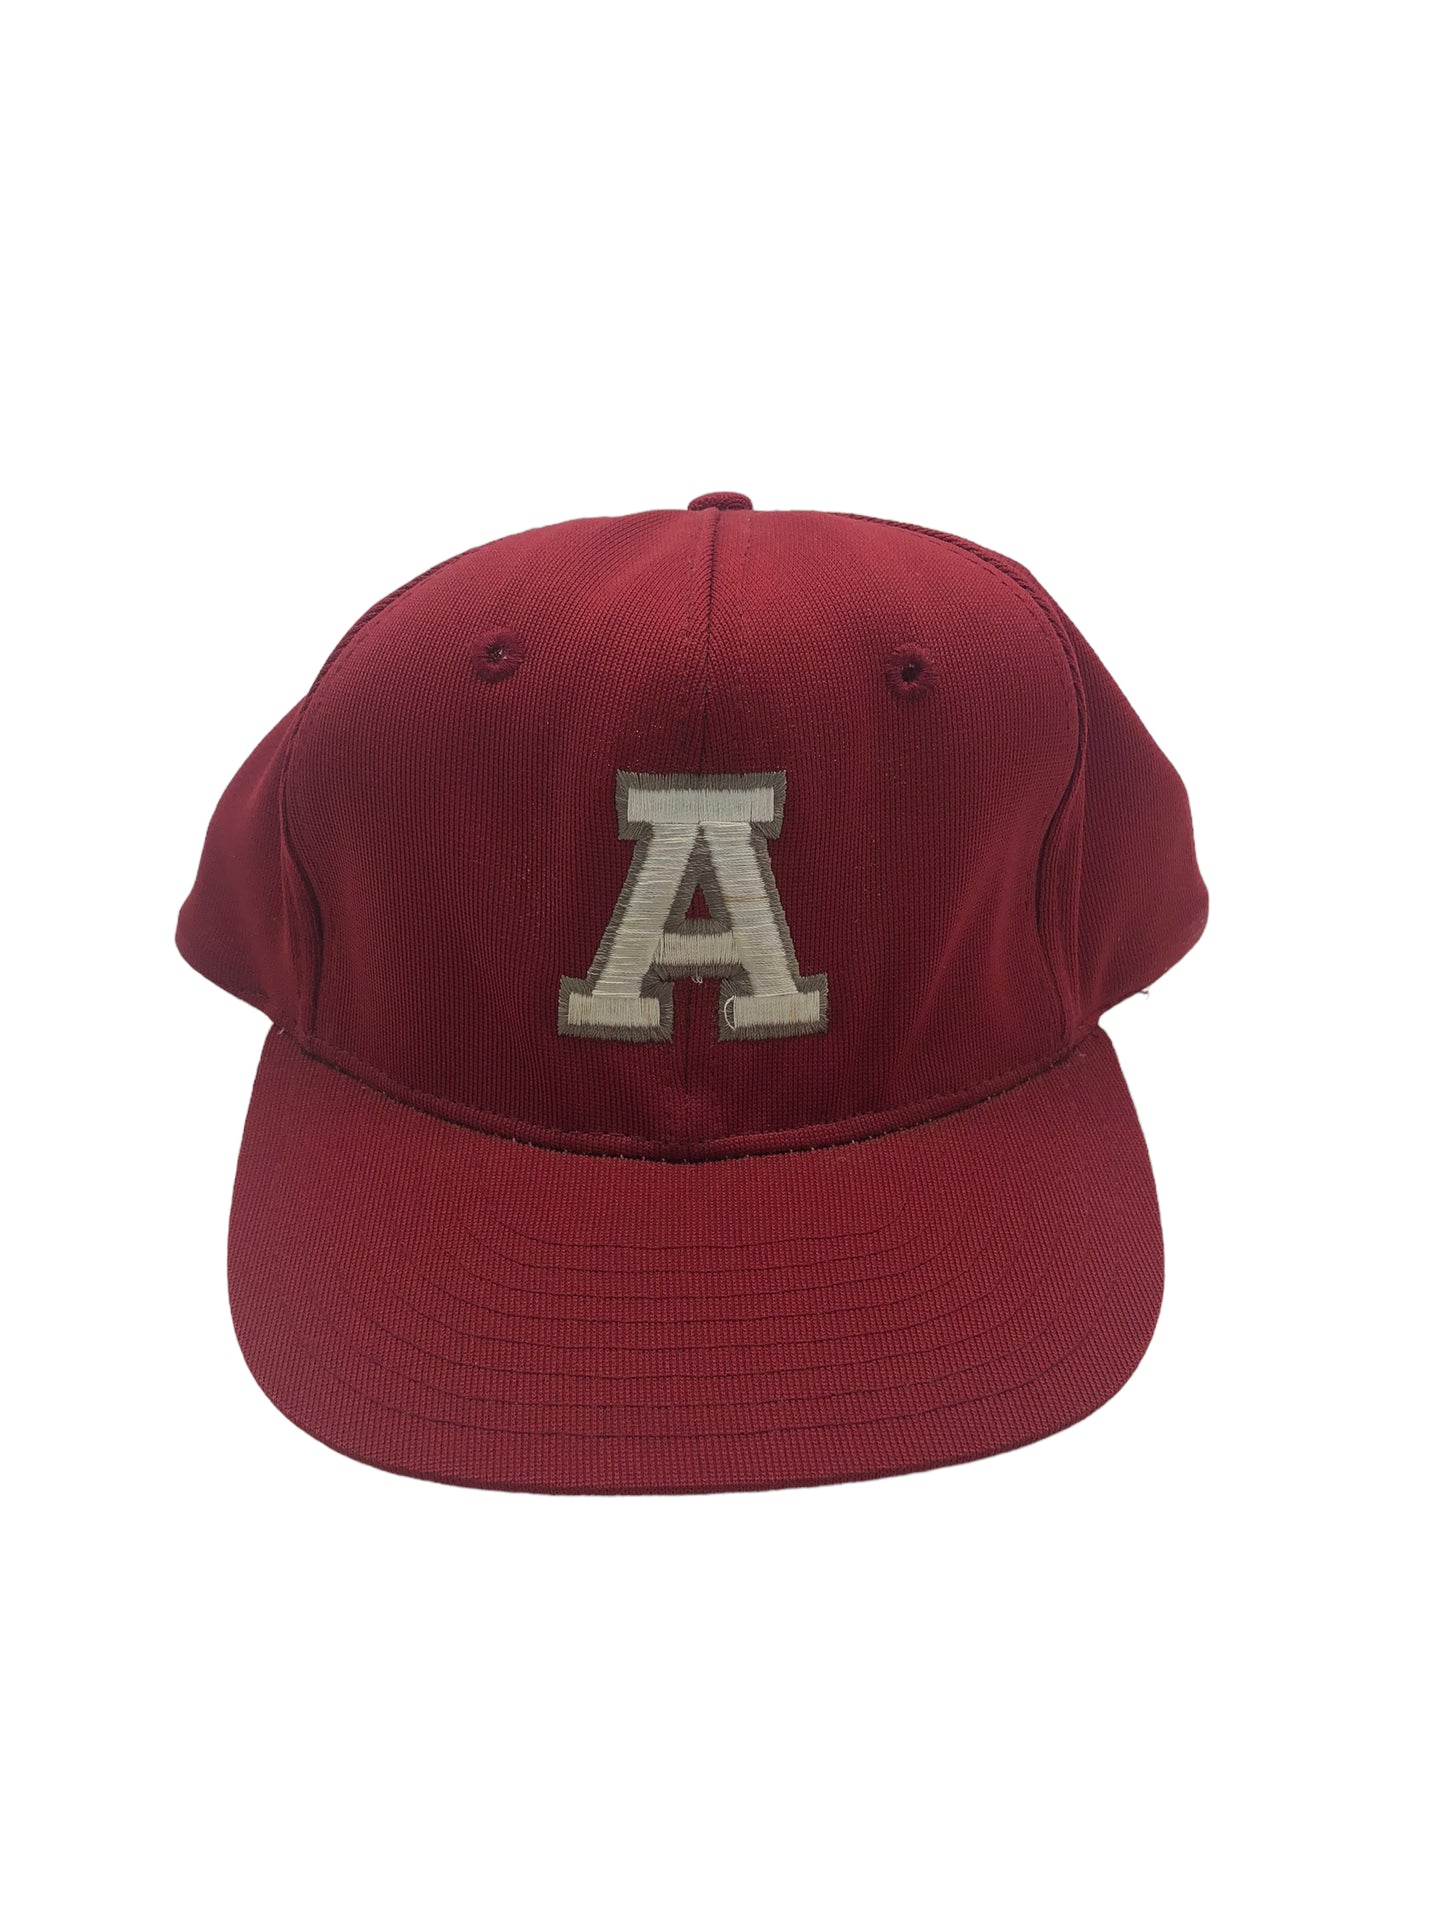 VTG A Alabama SnapBack Hat